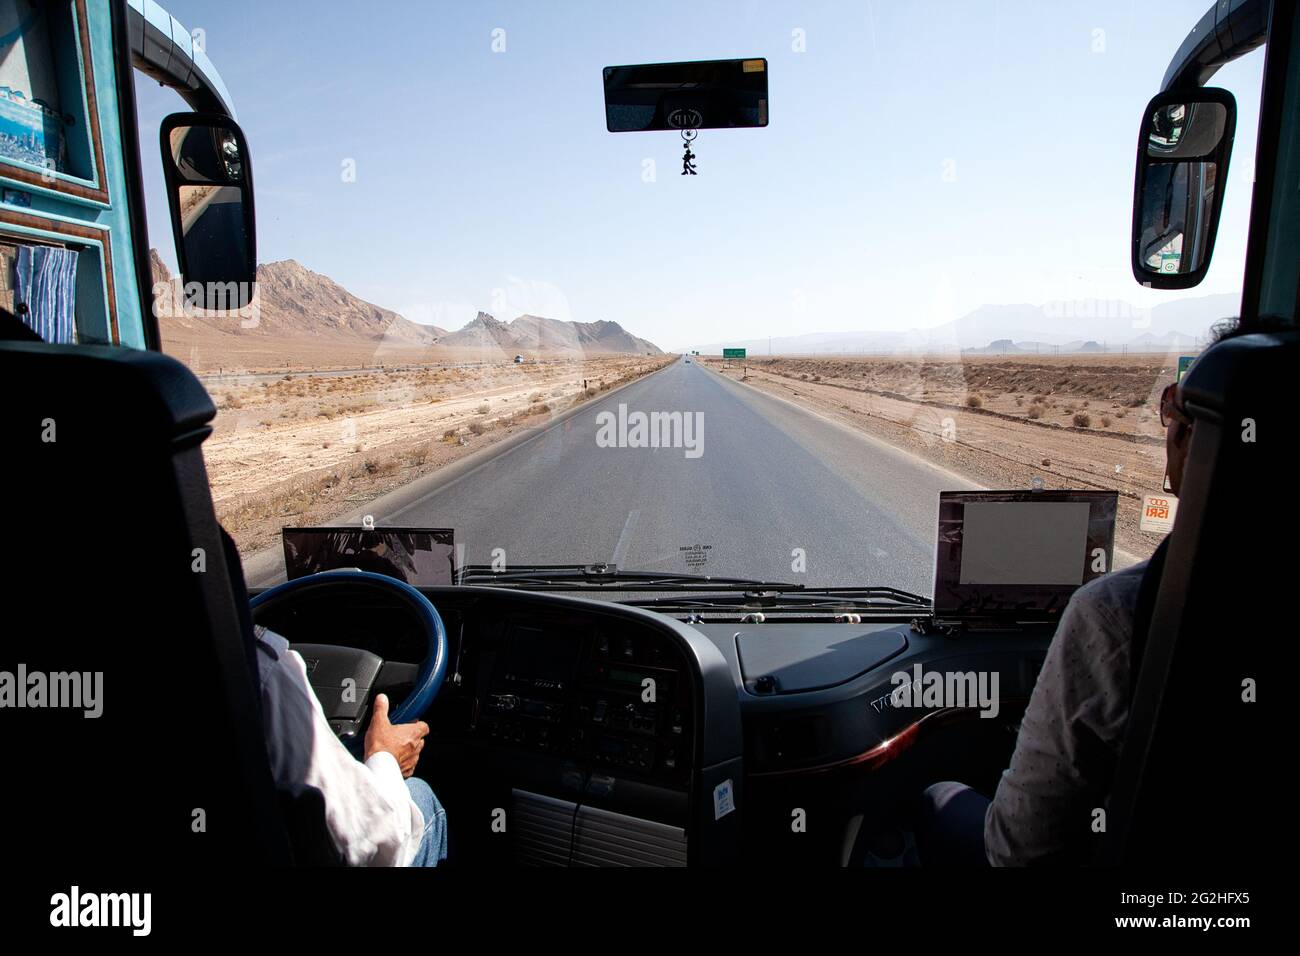 Travel through Iran by bus Stock Photo